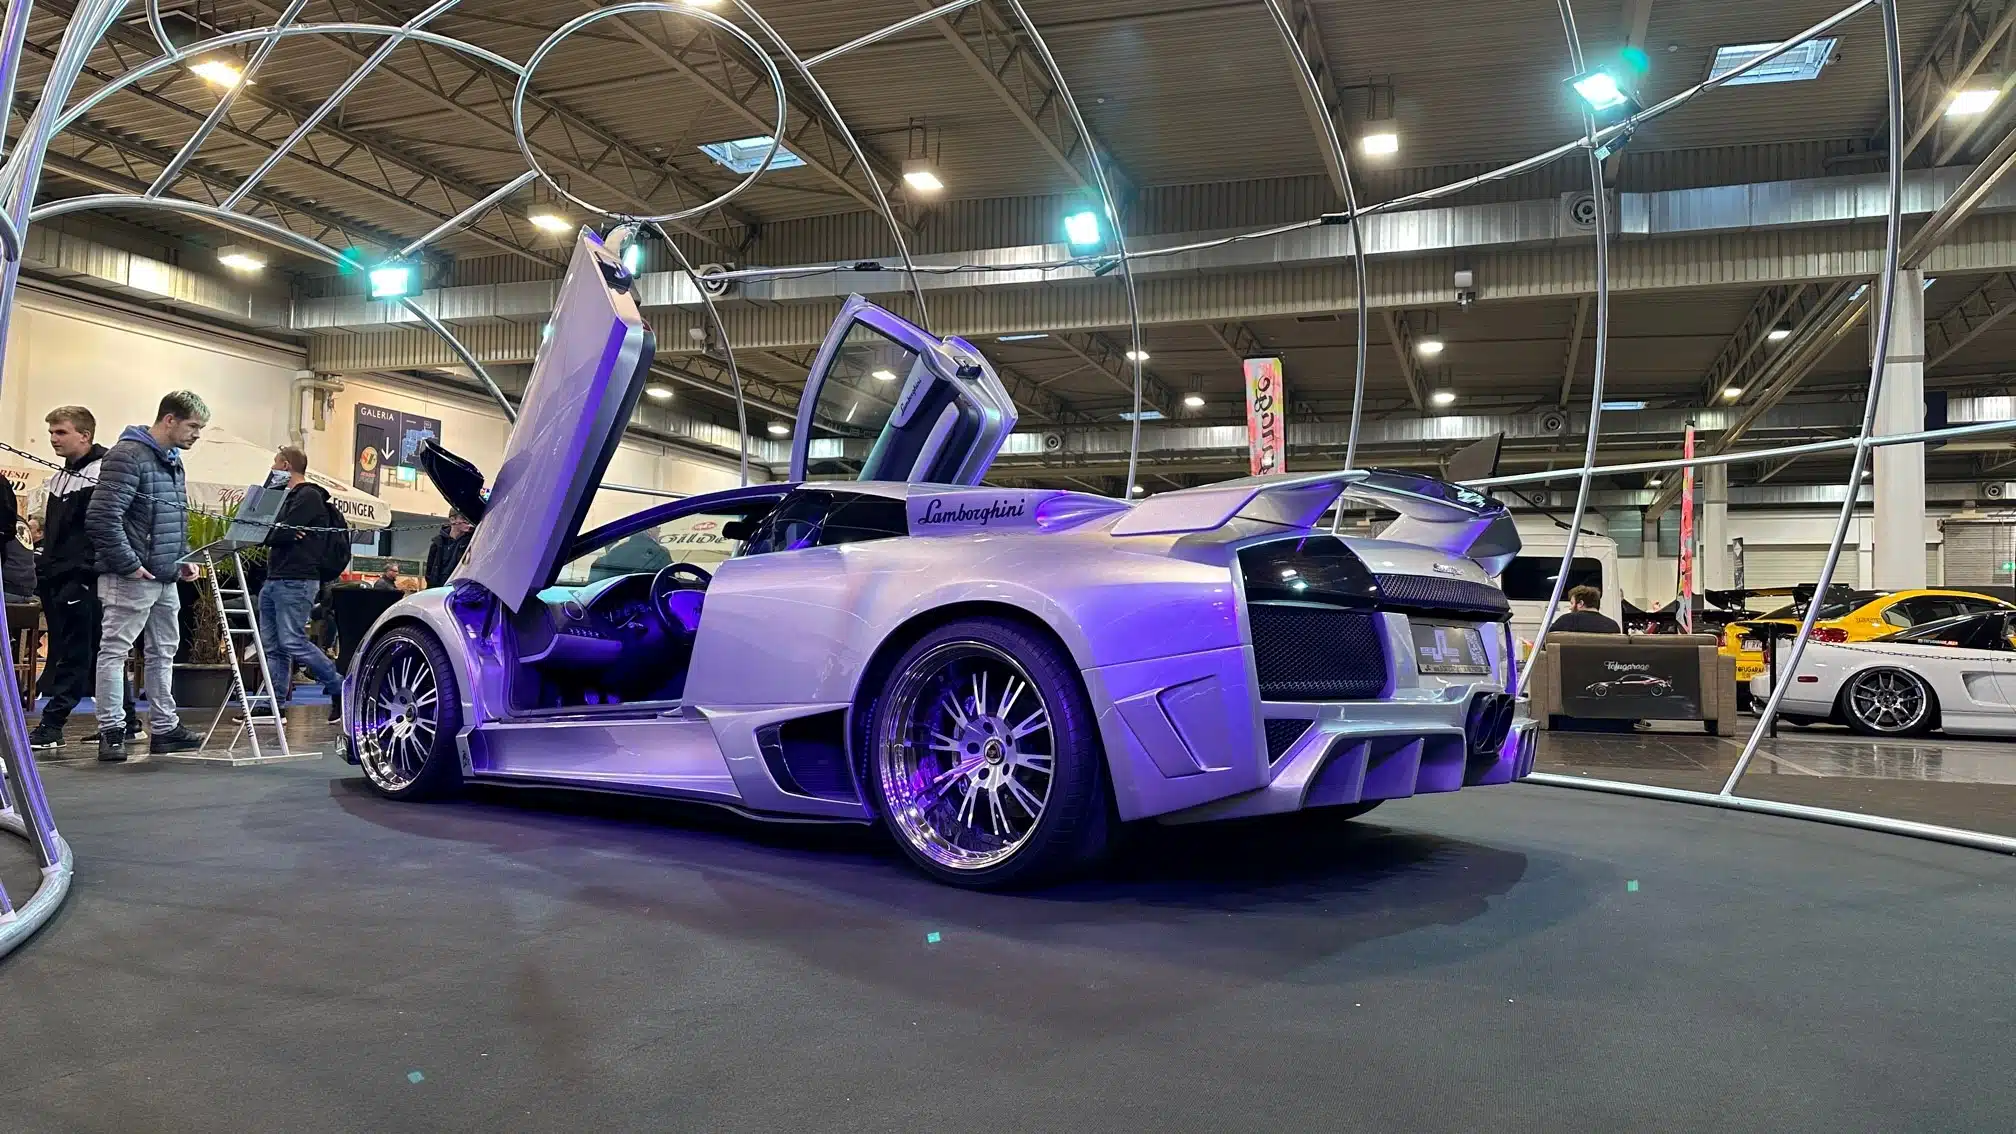 Purple Lamborghini displayed at Essen Motor Show 2022